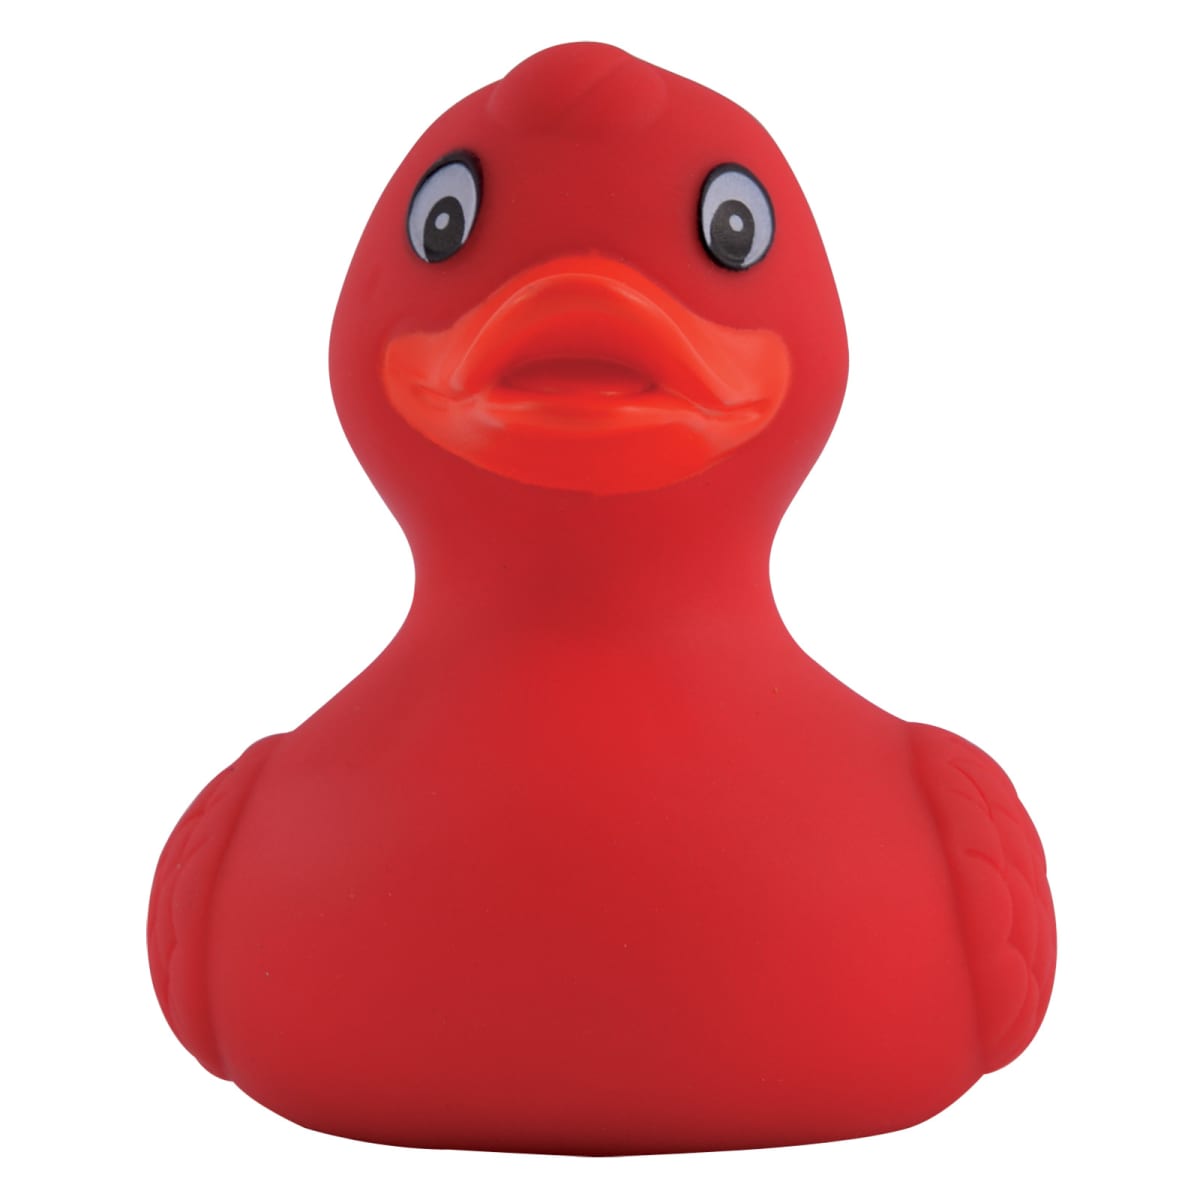 Quack PVC Bath Duck